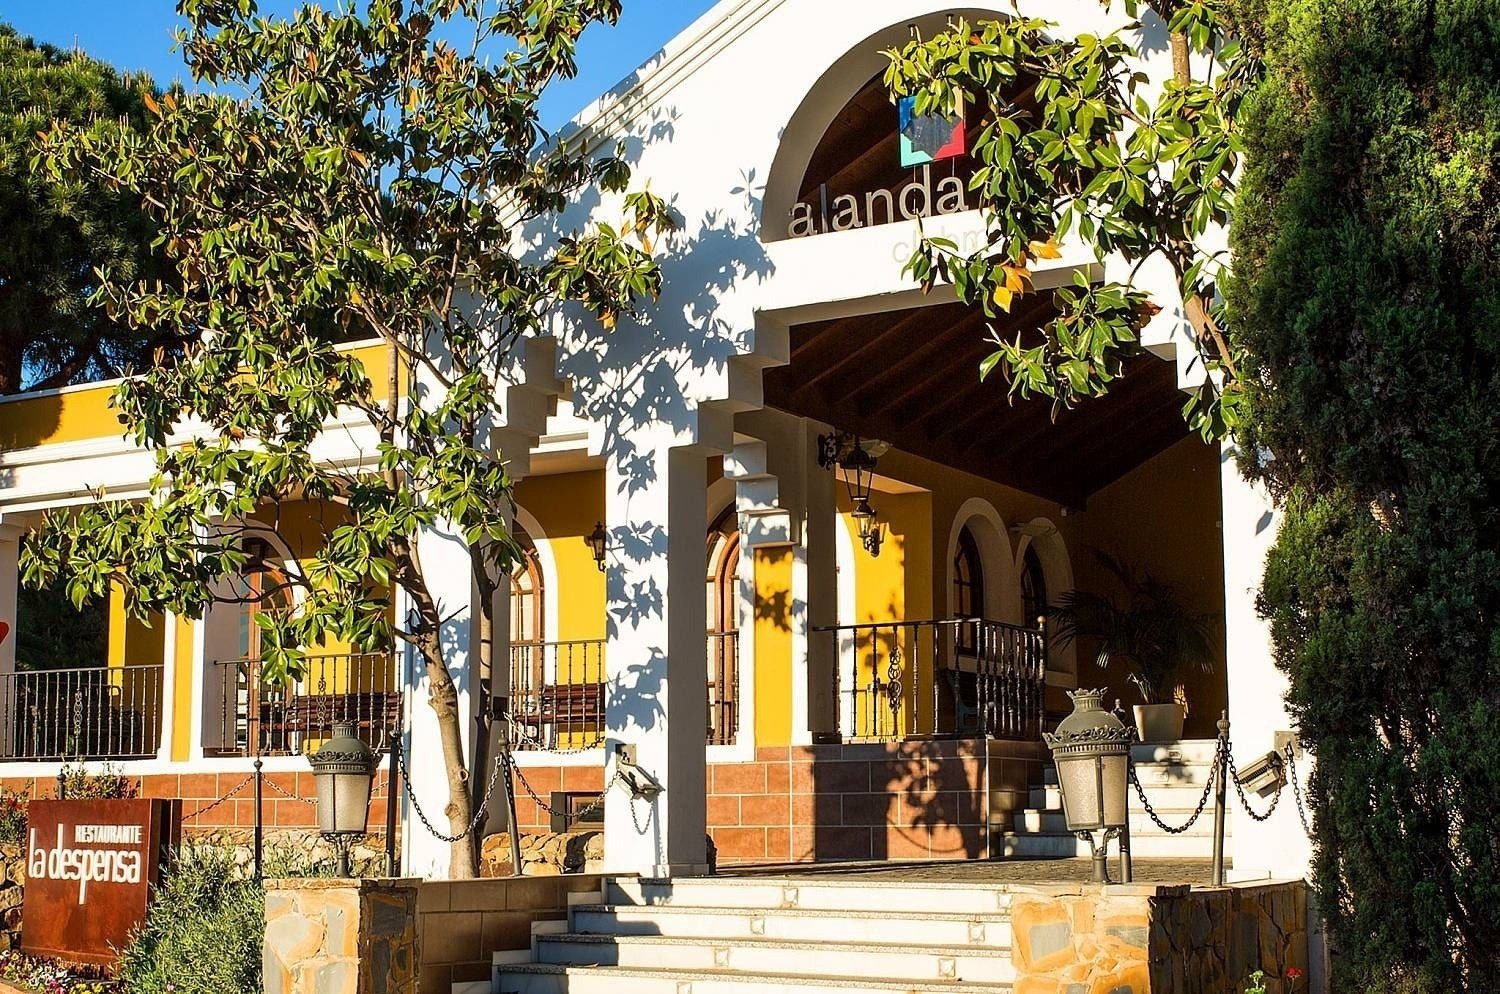 Entrance of the Hotel Ona Alanda Club Marbella